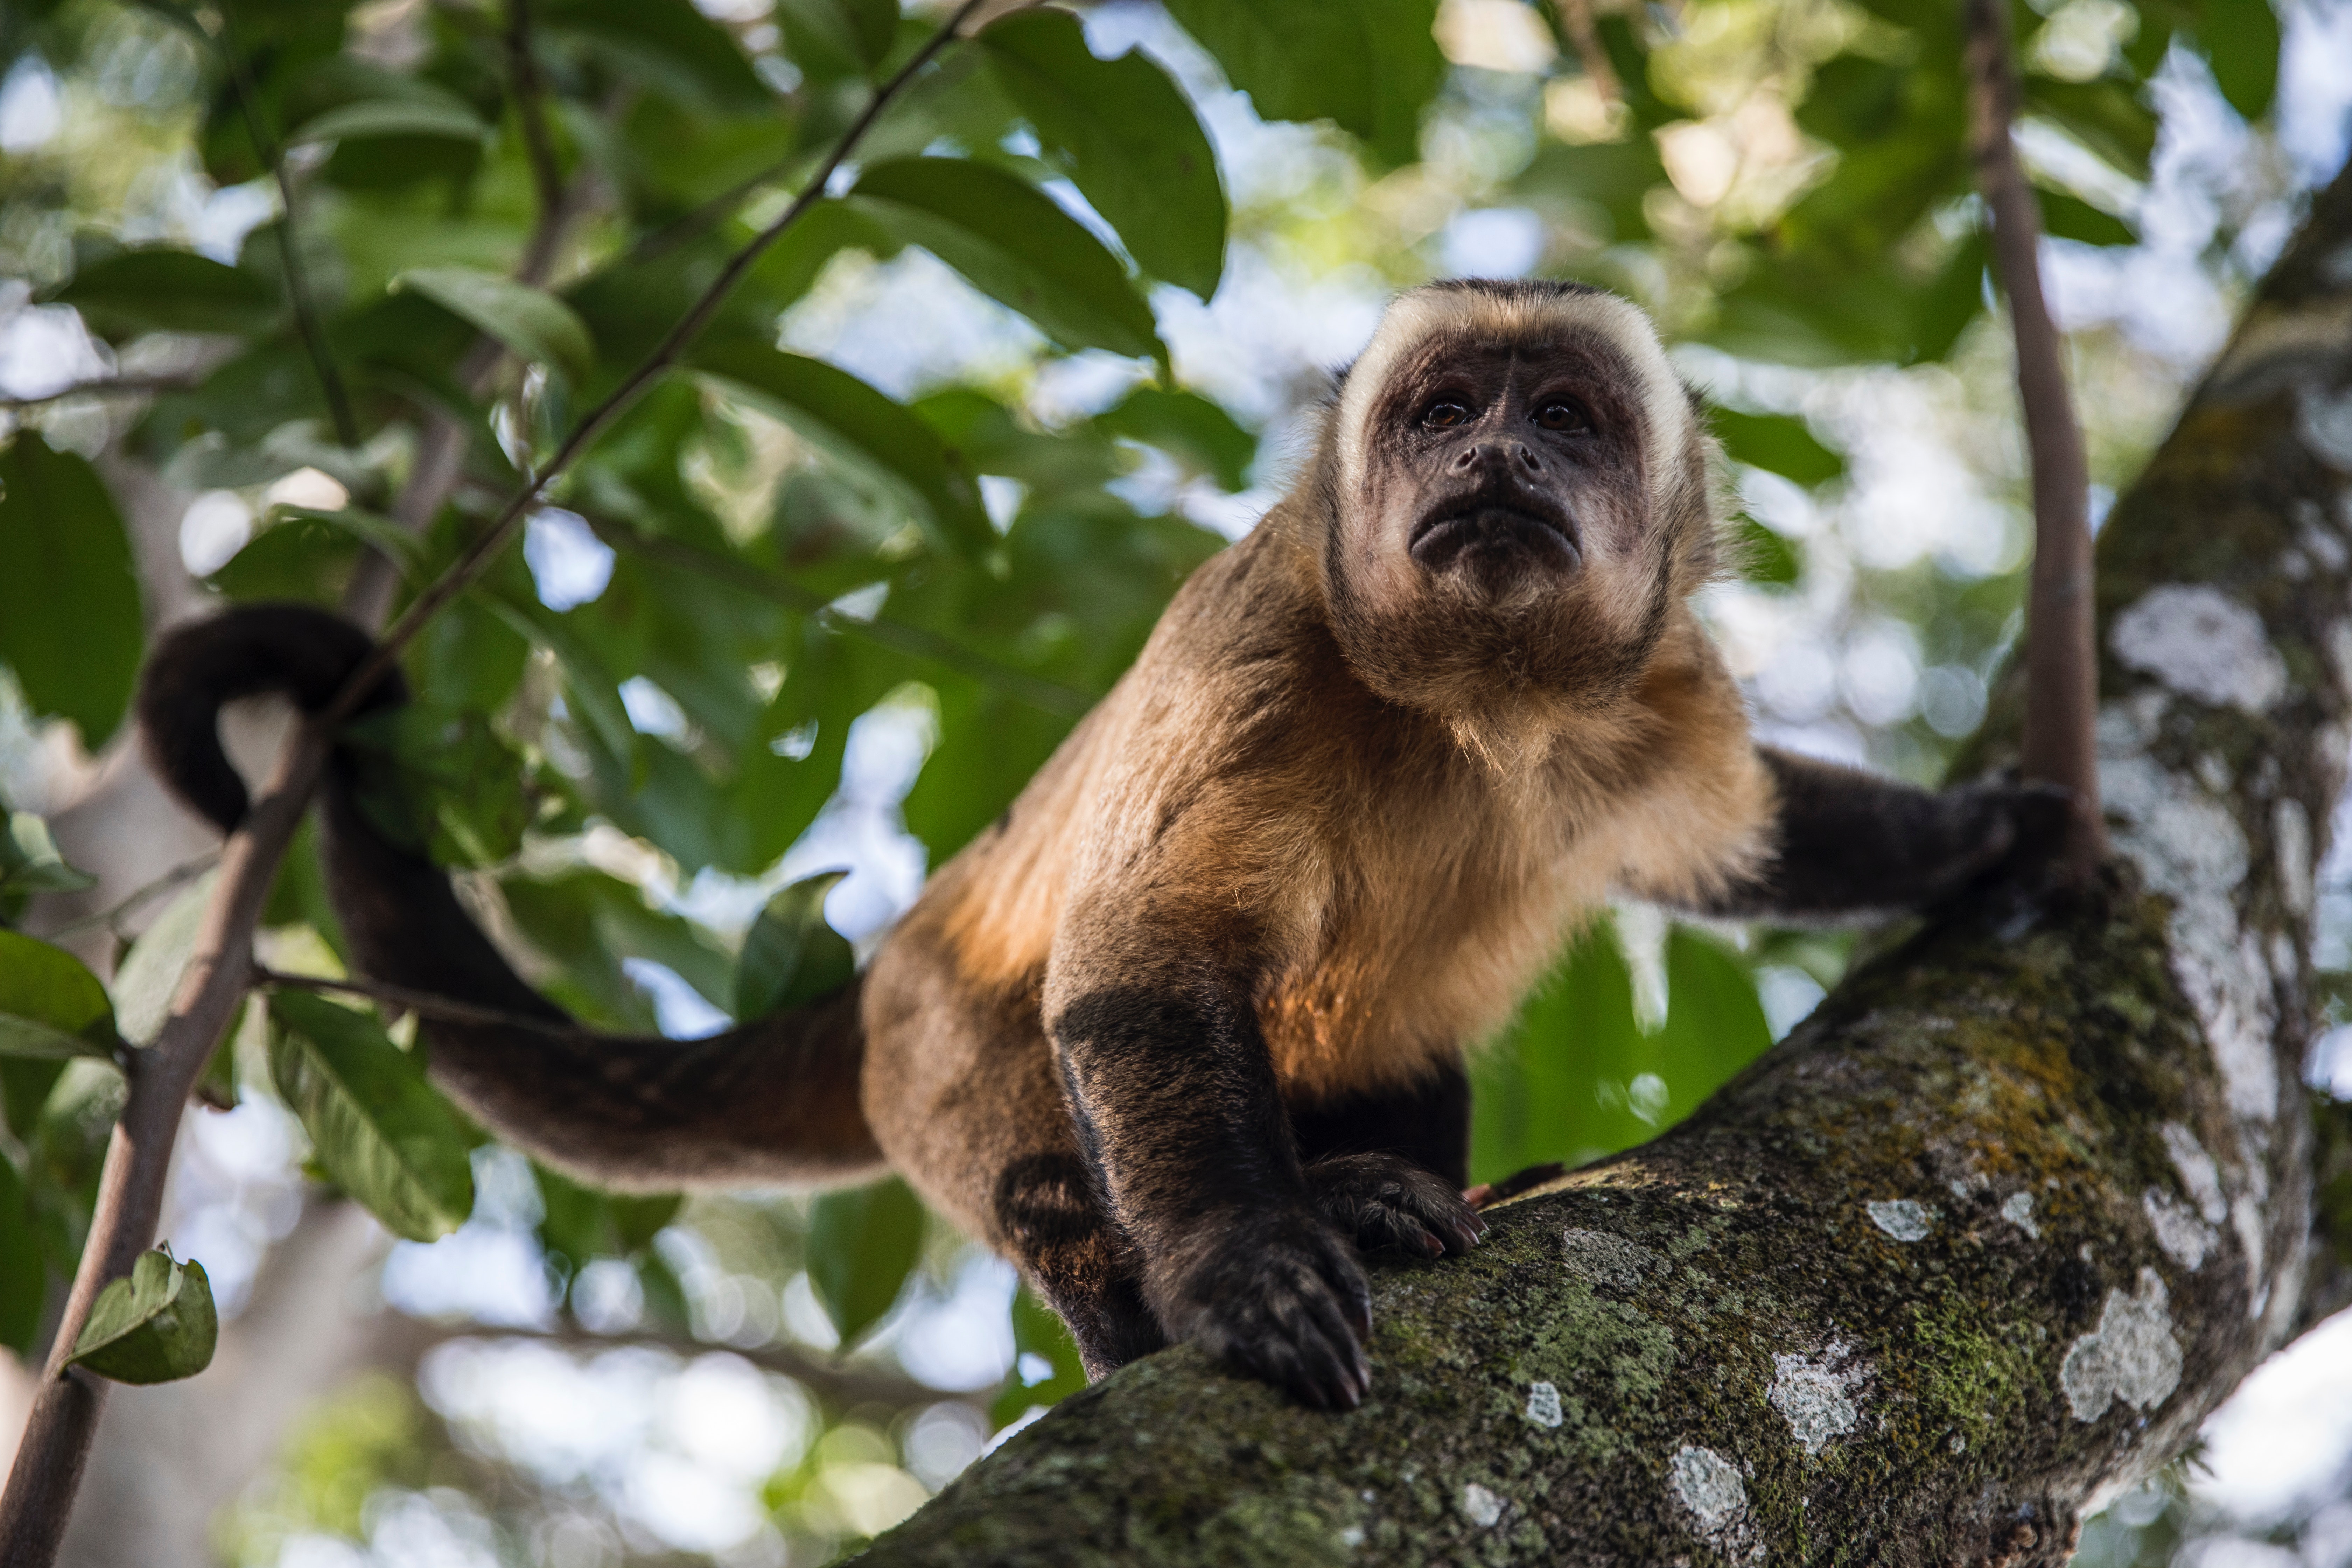 Best Capuchin Monkey Photo · 100% Free Downloads